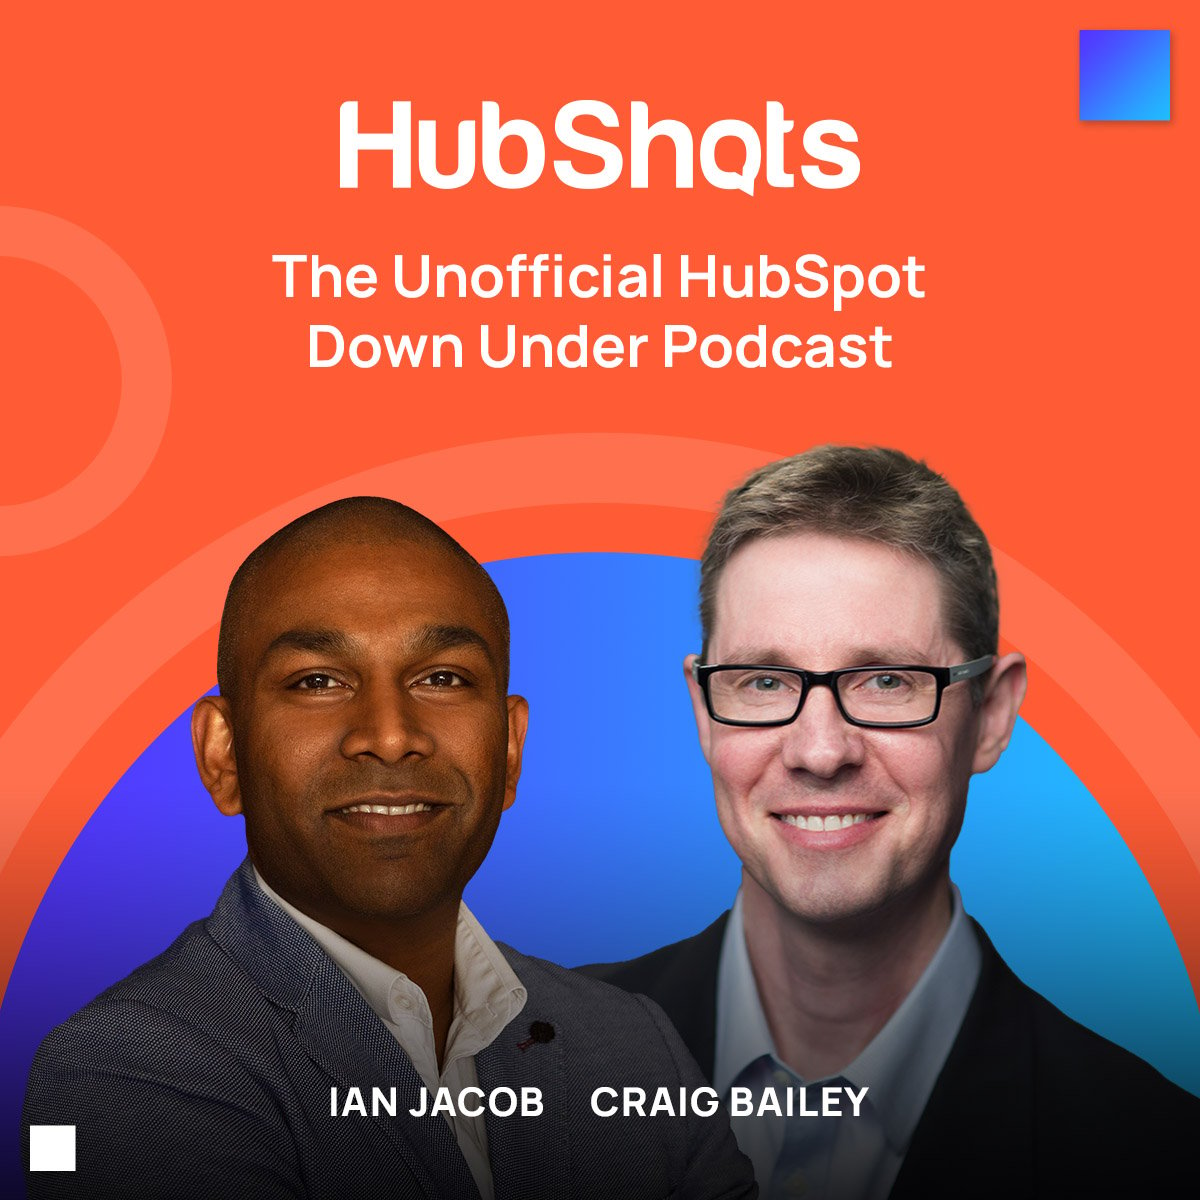 HubShots with Ian Jacob and Craig Bailey